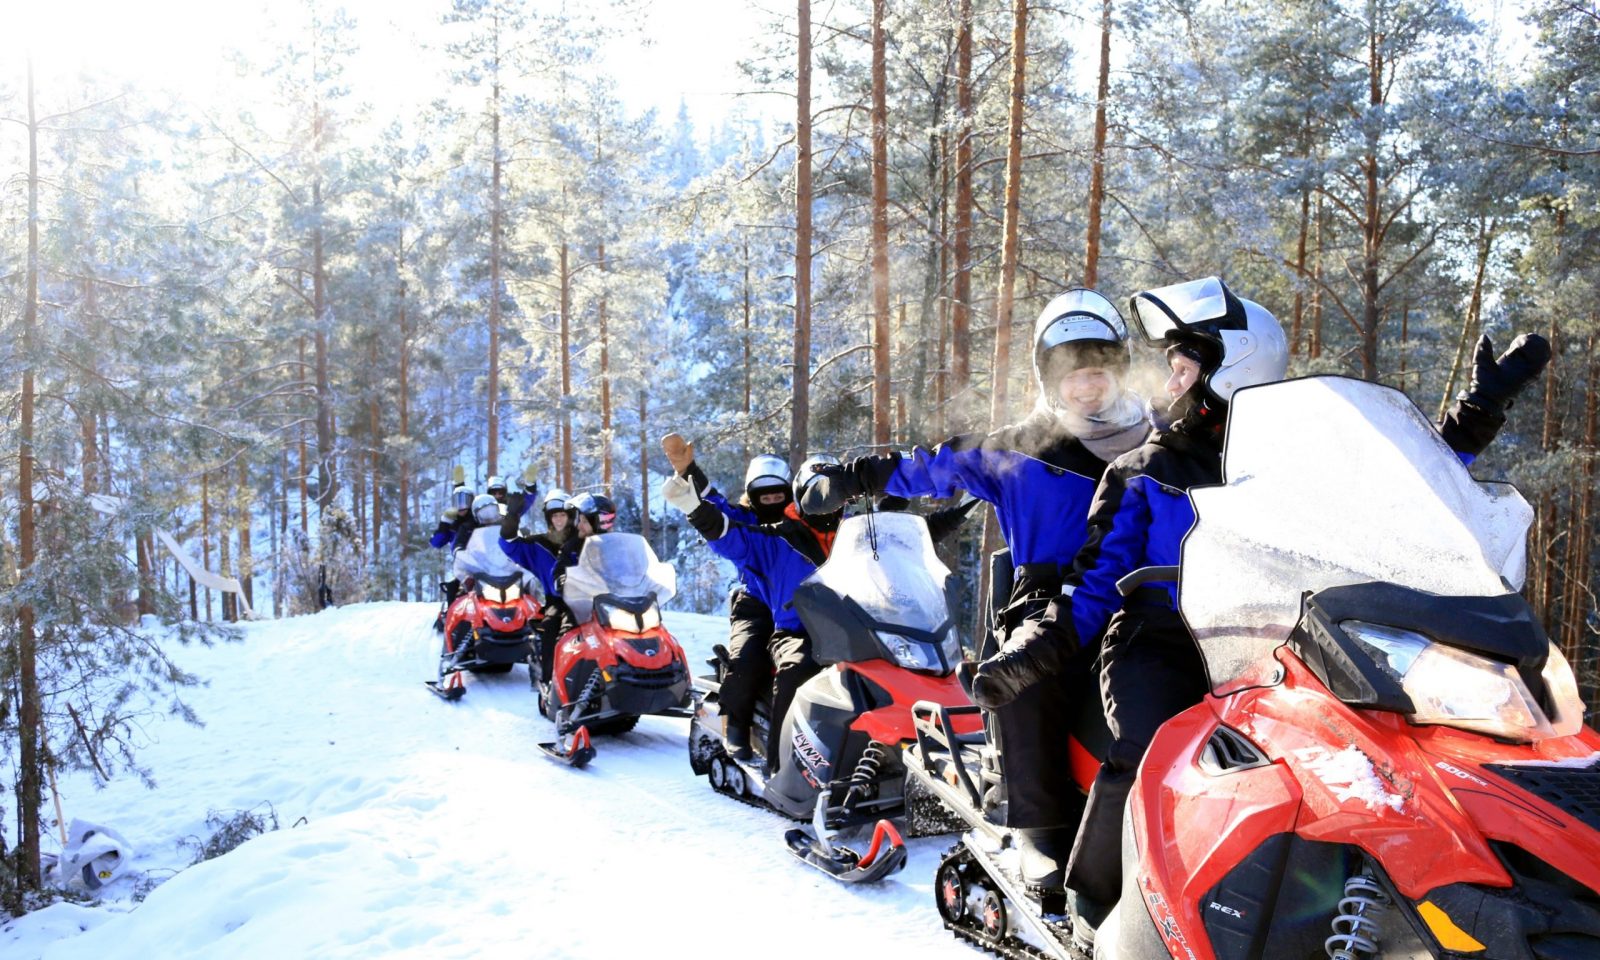 Lakeland / Snowmobile safaris on request, winter activities on request, Wild Nordic Finland @wildnordicfinland